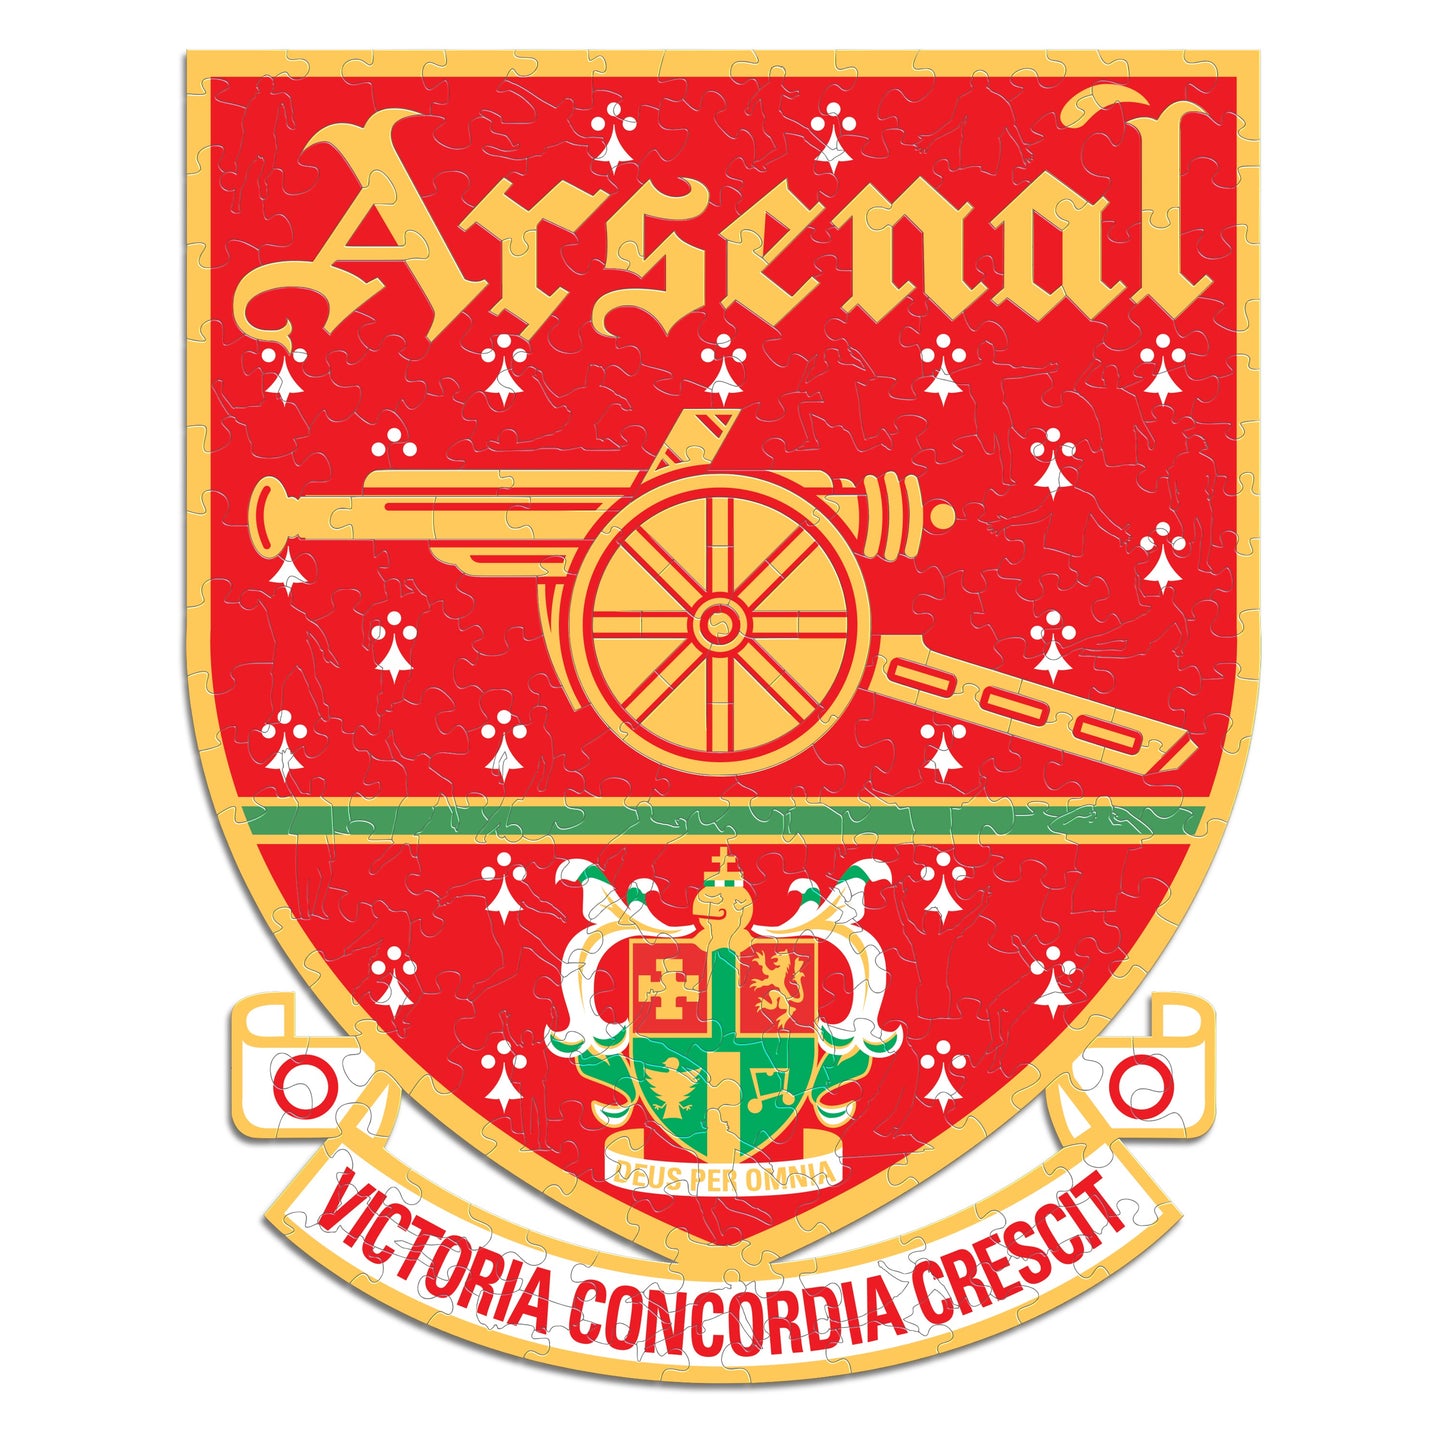 2 PACK Arsenal FC® Logo + Retro Logo